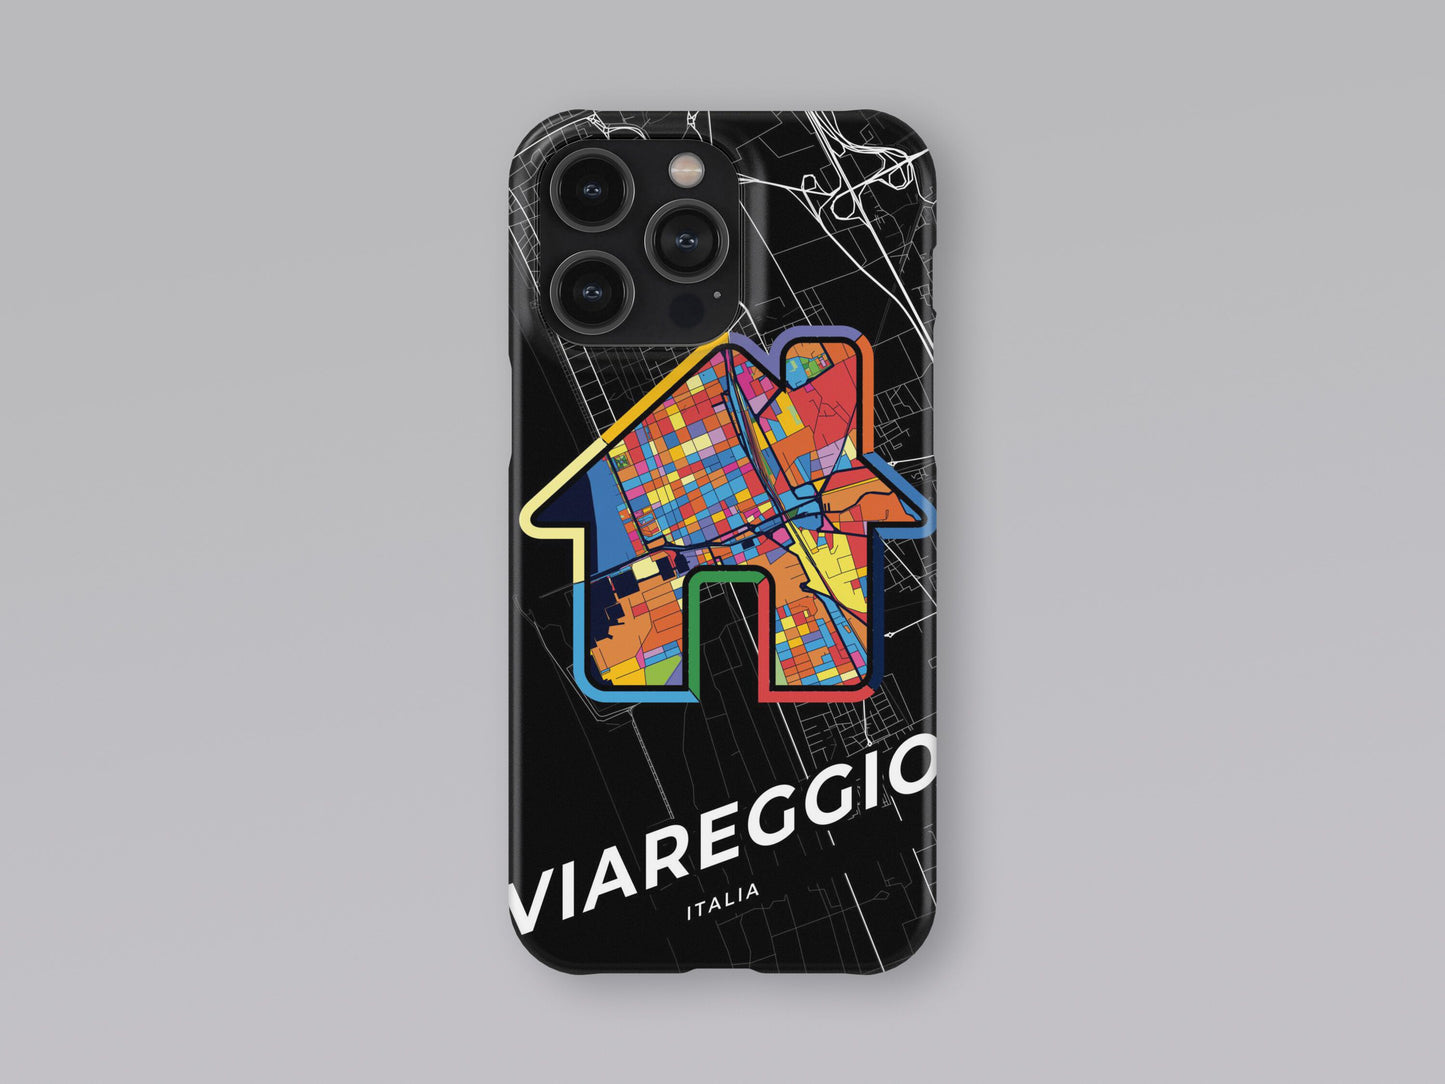 Viareggio Italy slim phone case with colorful icon 3